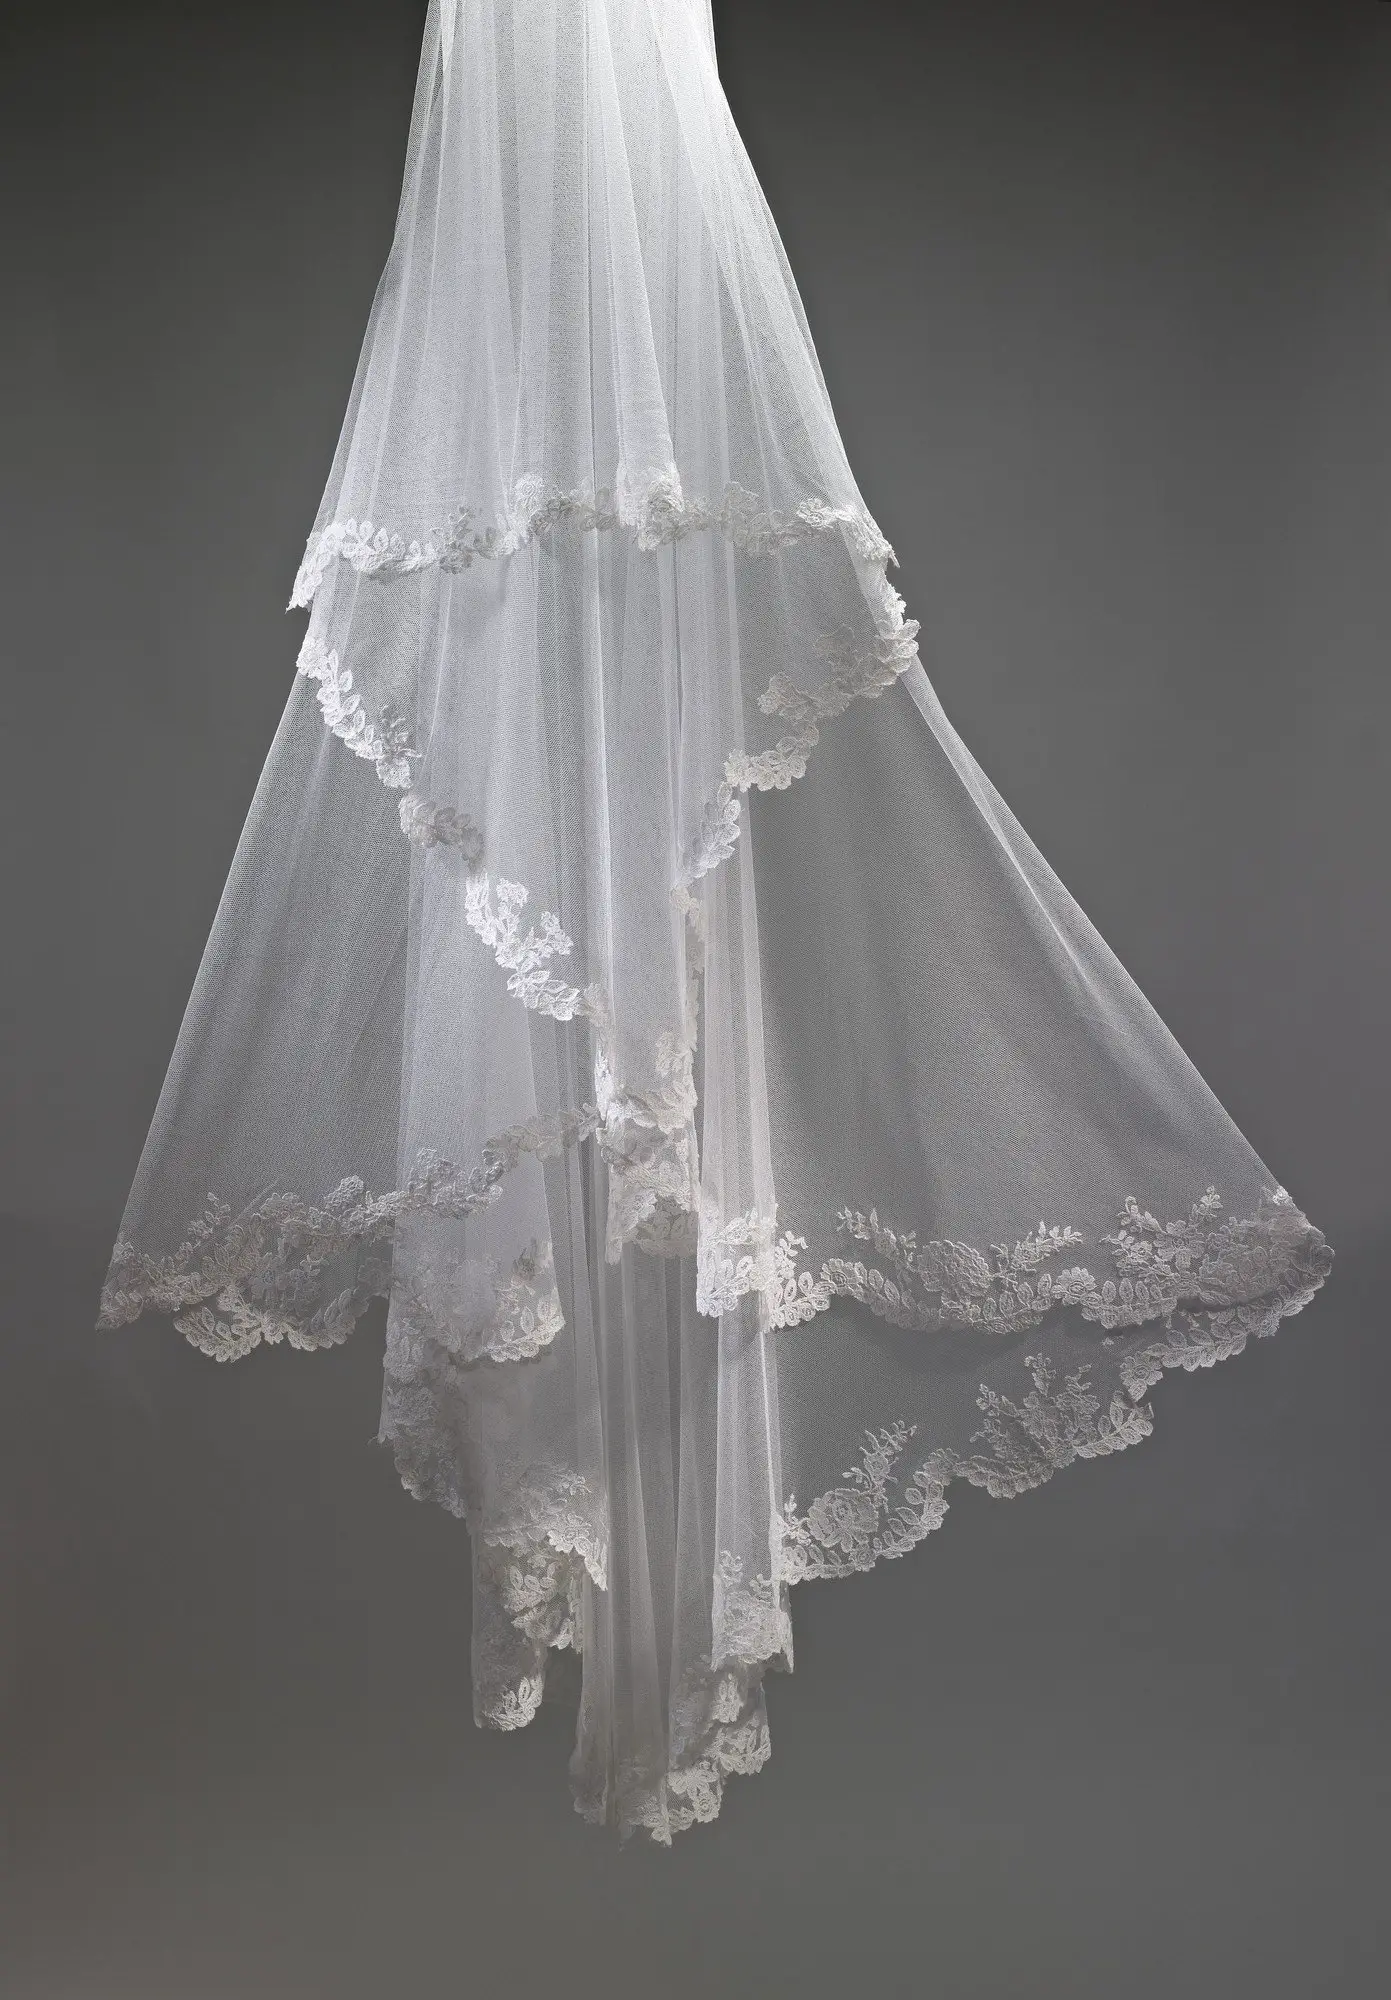 The Duchess of Cambridge's wedding veil